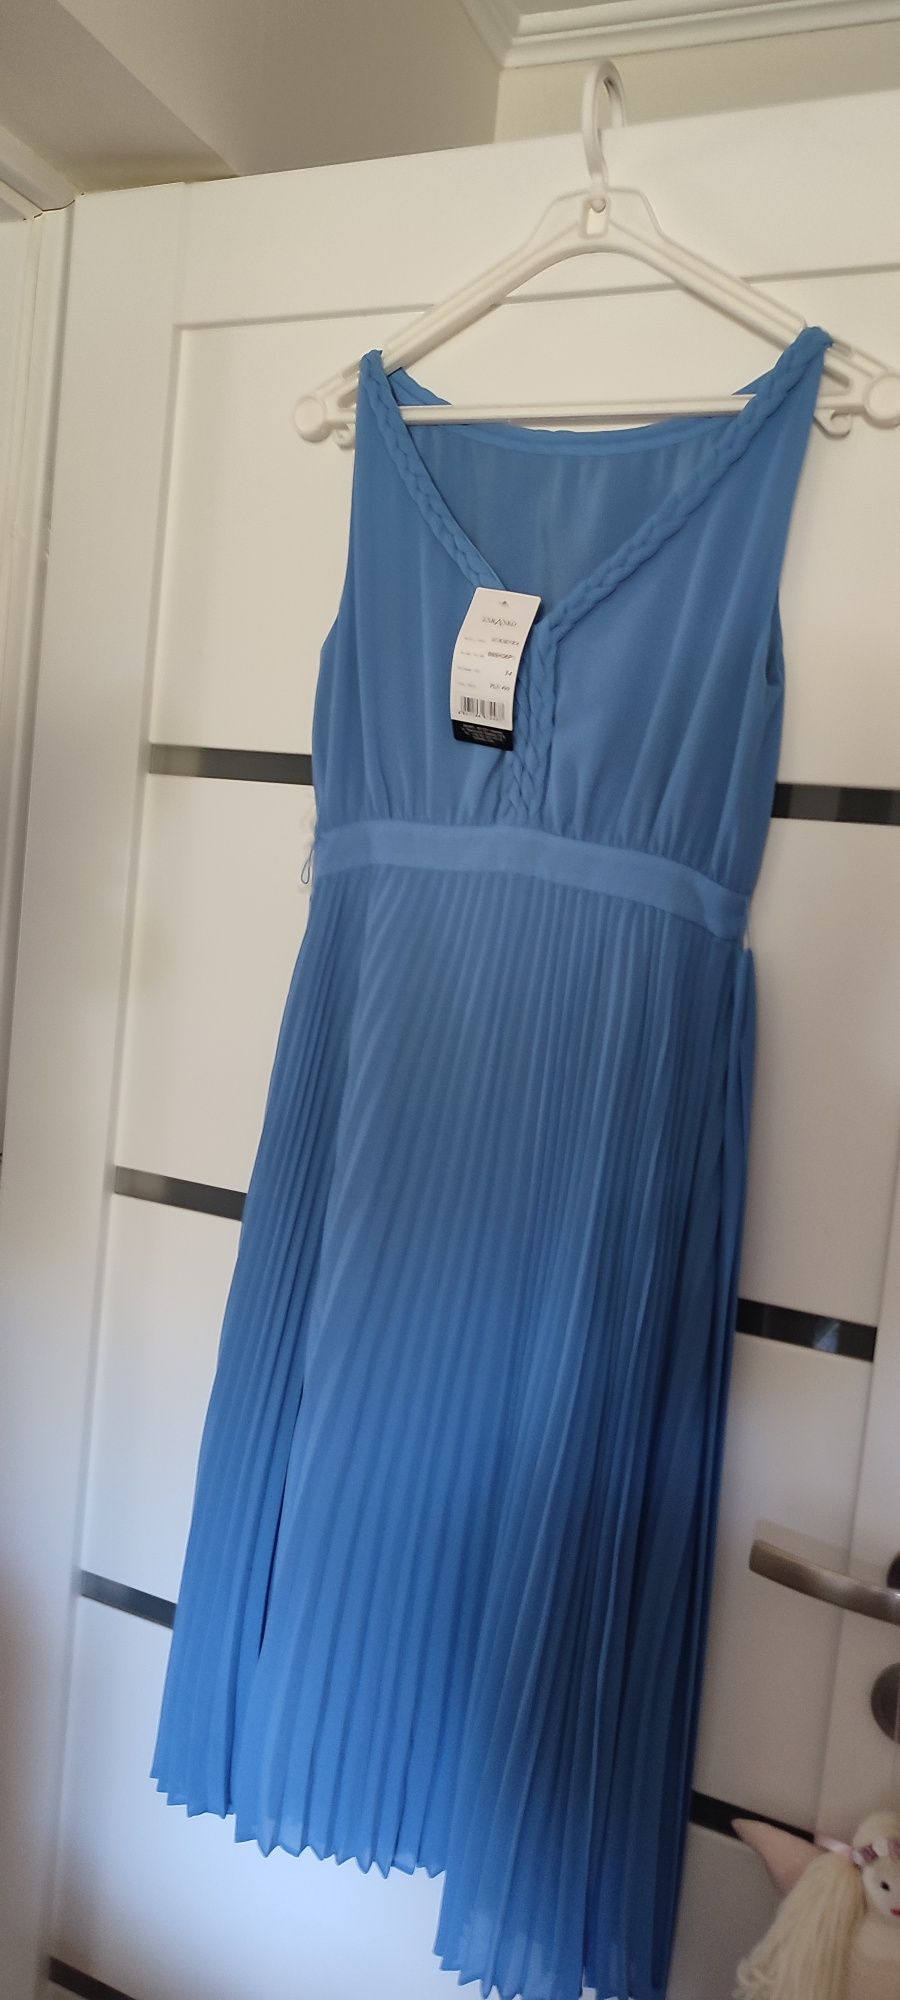 Taranko śliczna niebieska sukienka r.34